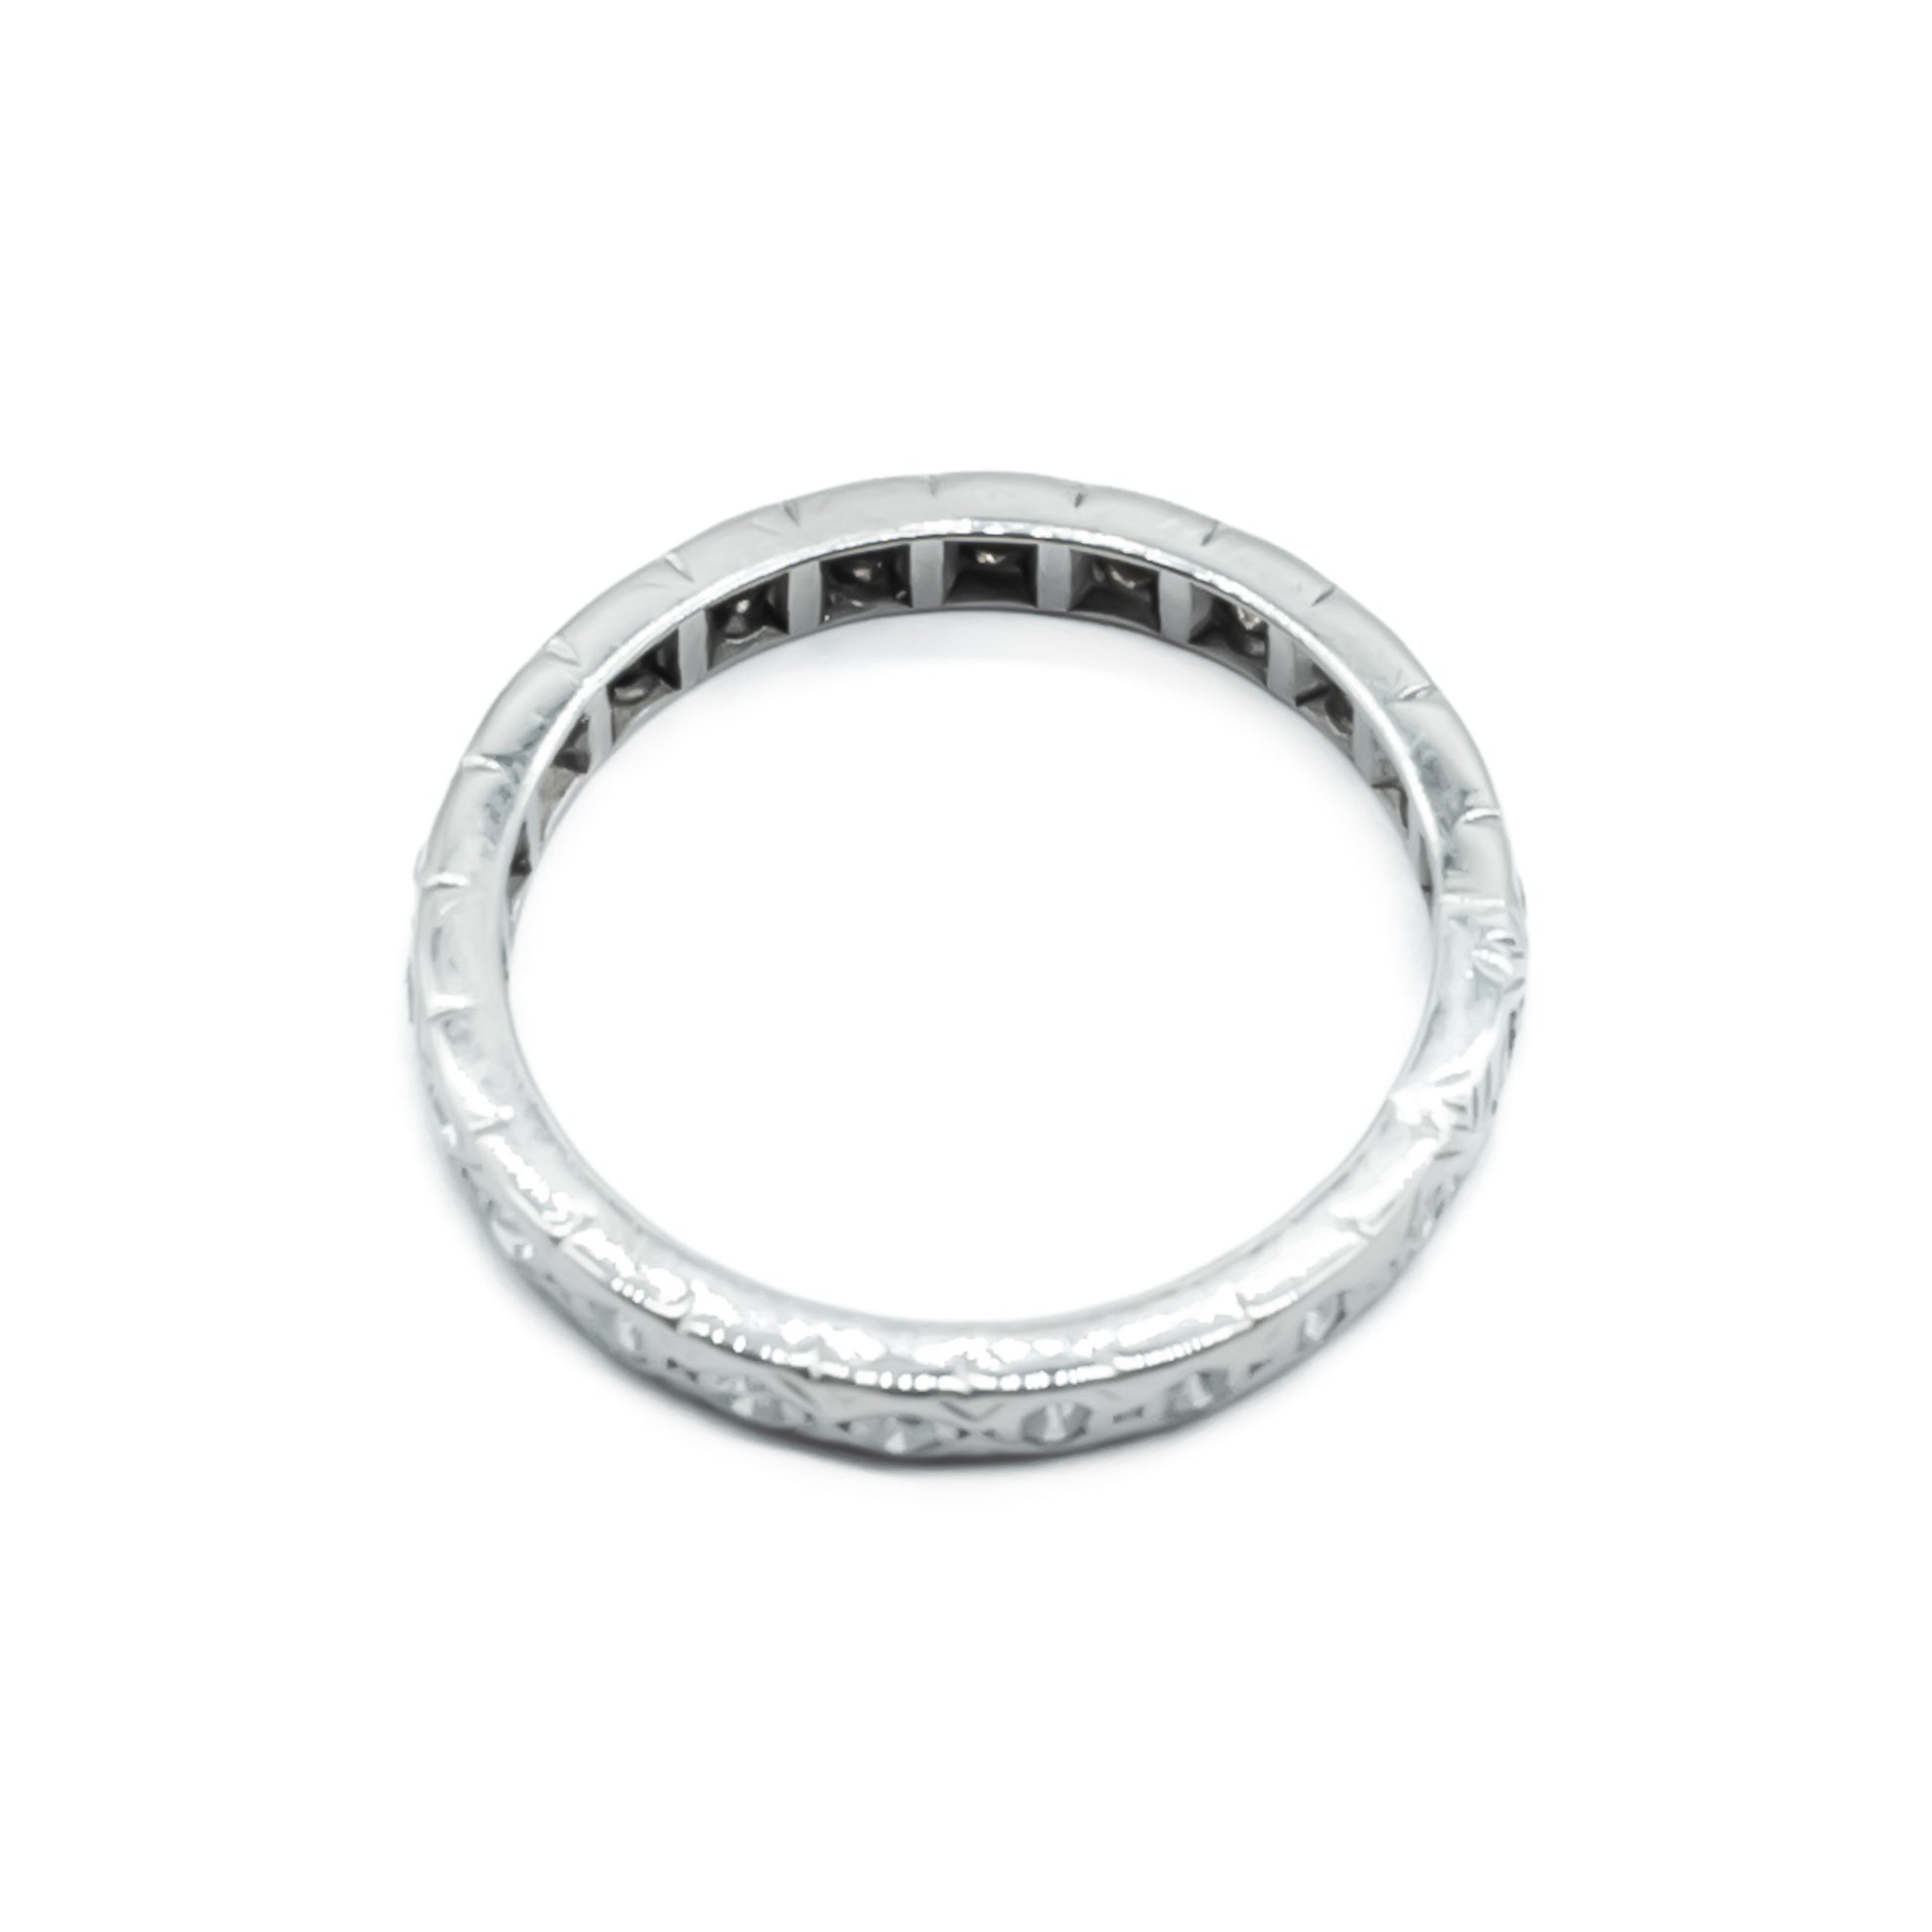 Dainty platinum eternity ring set with twenty-two European-cut diamonds. Circa 1920’s